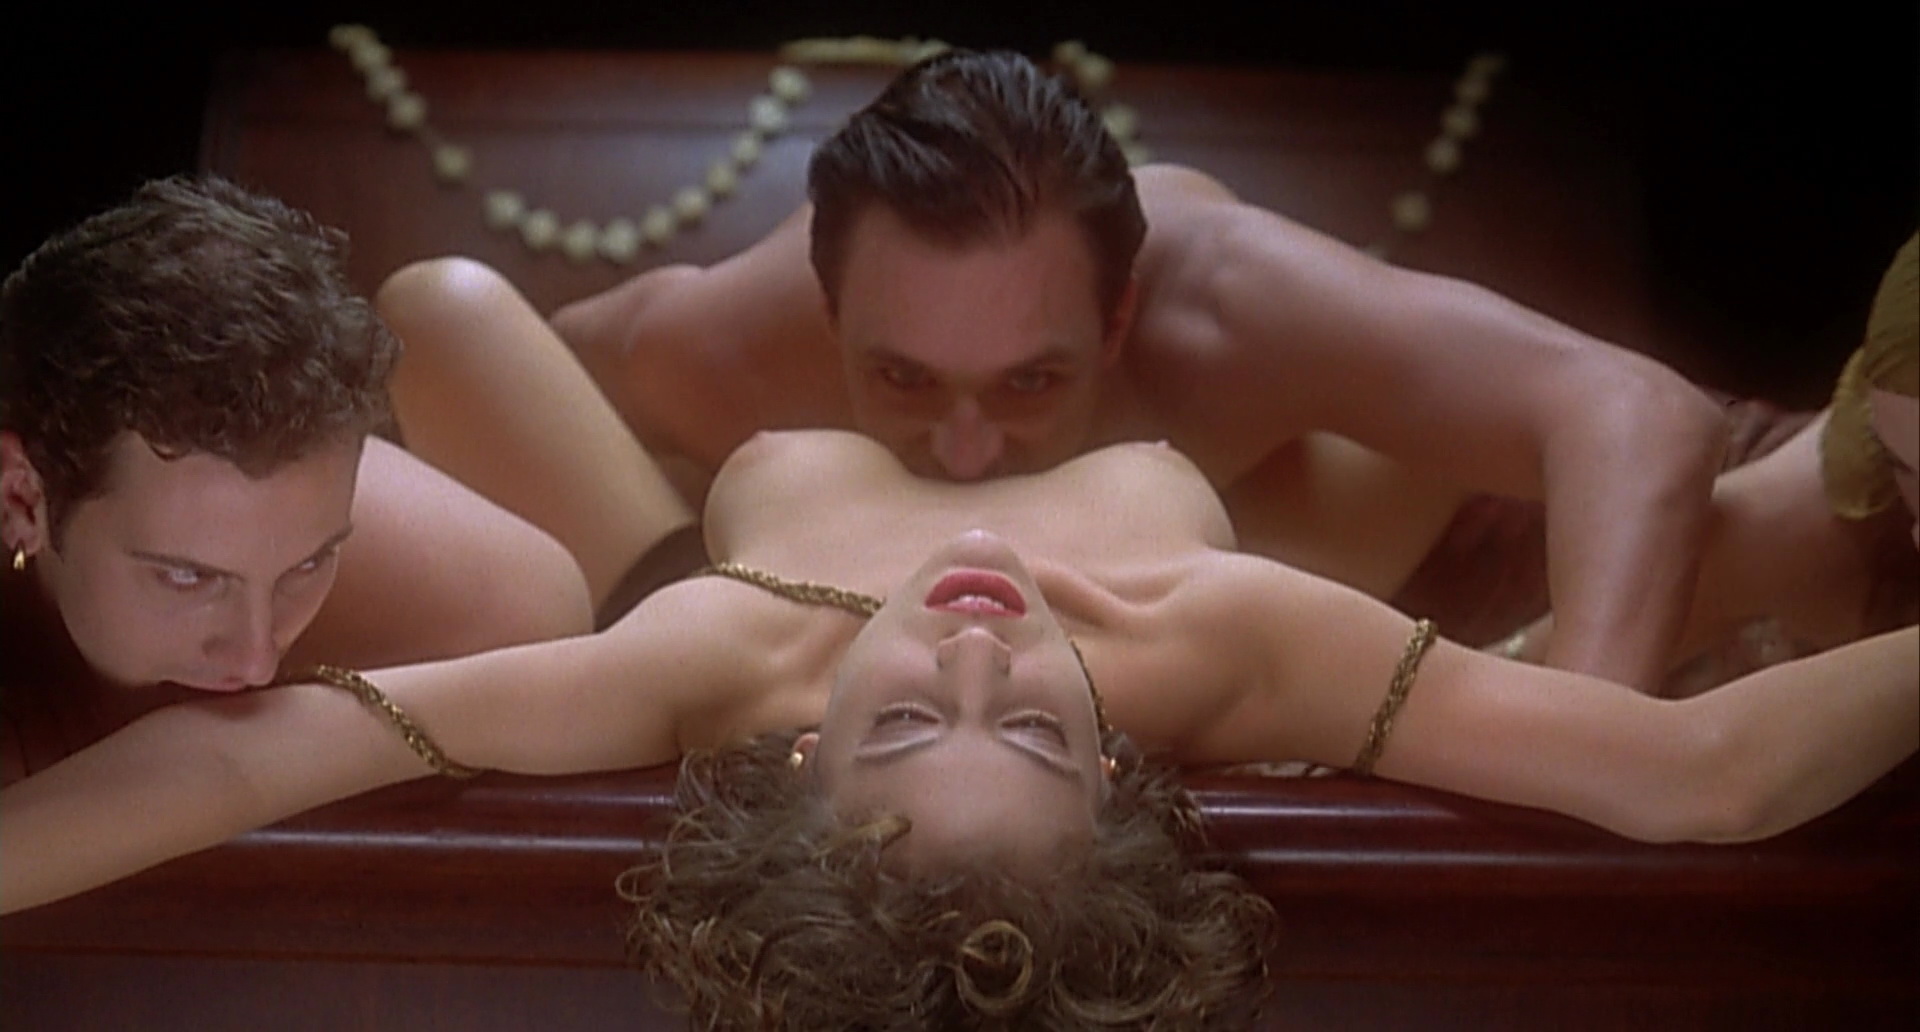 Female vampire sex scene - 🧡 Sex with a Vampire nude pics, página - 1 ANC....